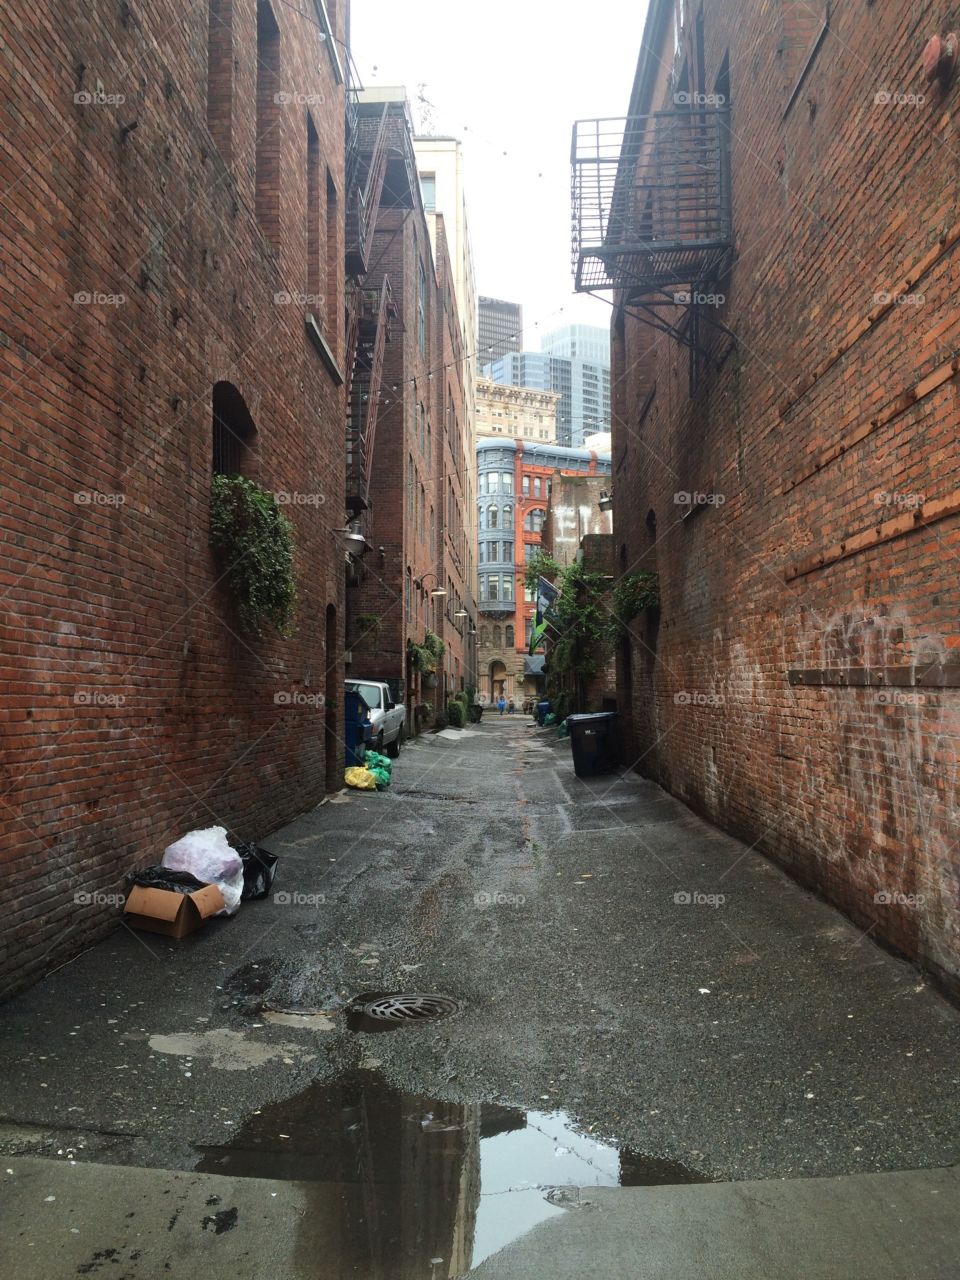 An alleyway in downtown Seattle.